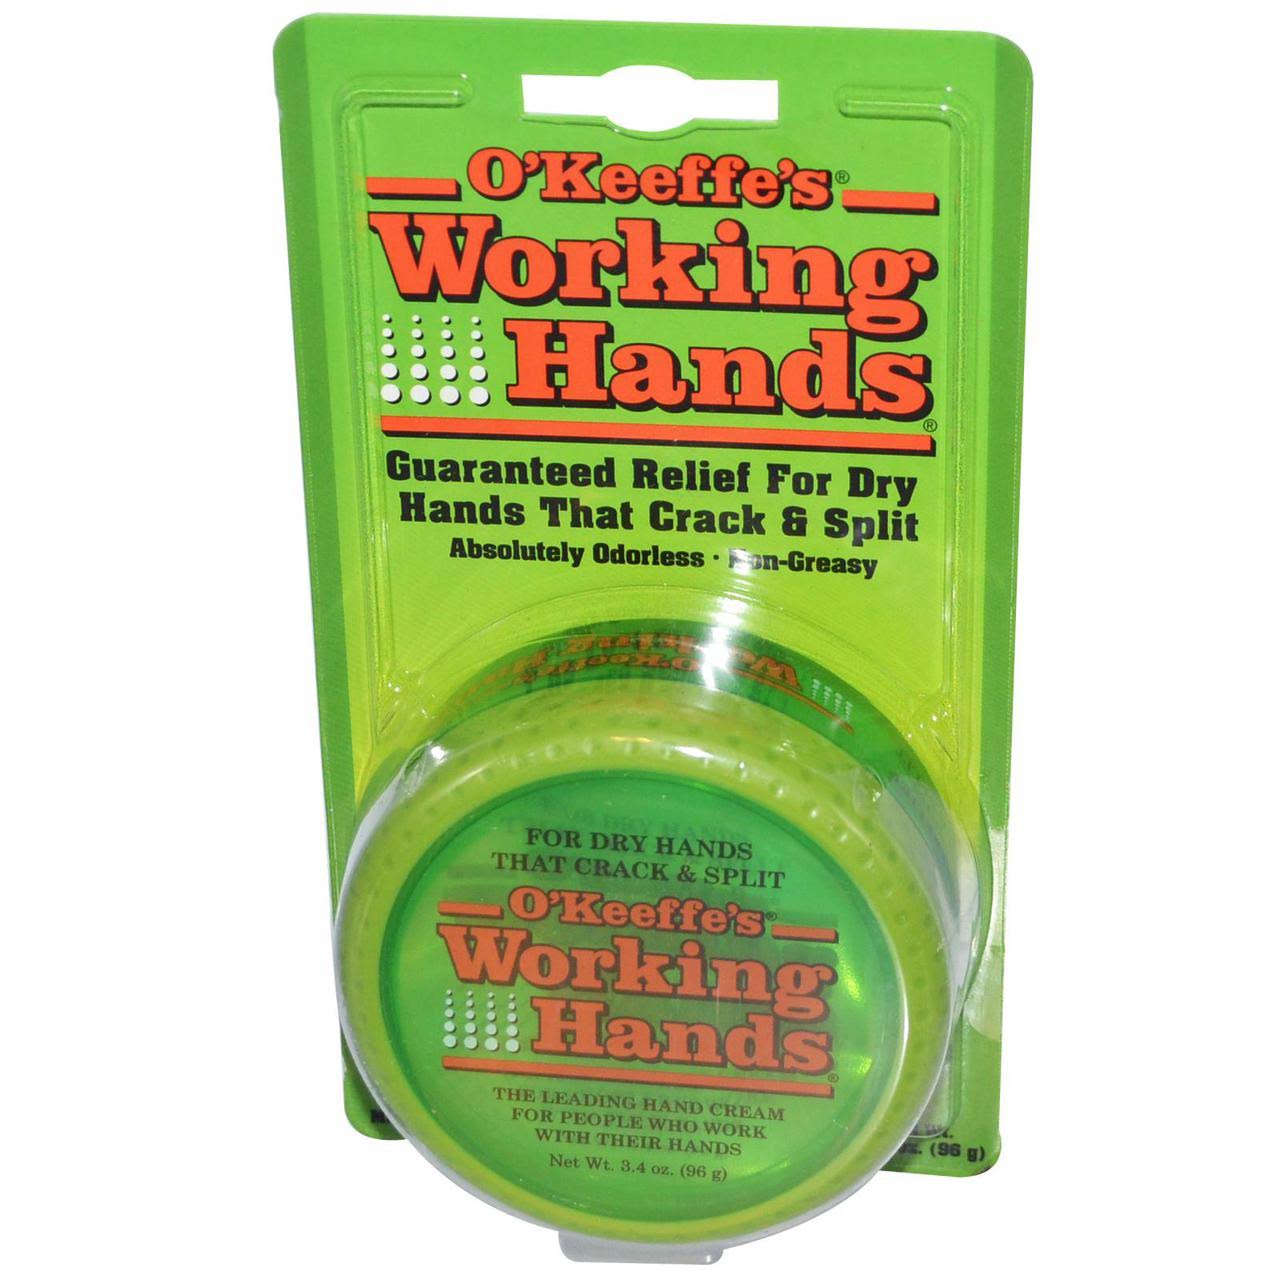 O'keeffe's Working Hands Cream - 3.4oz